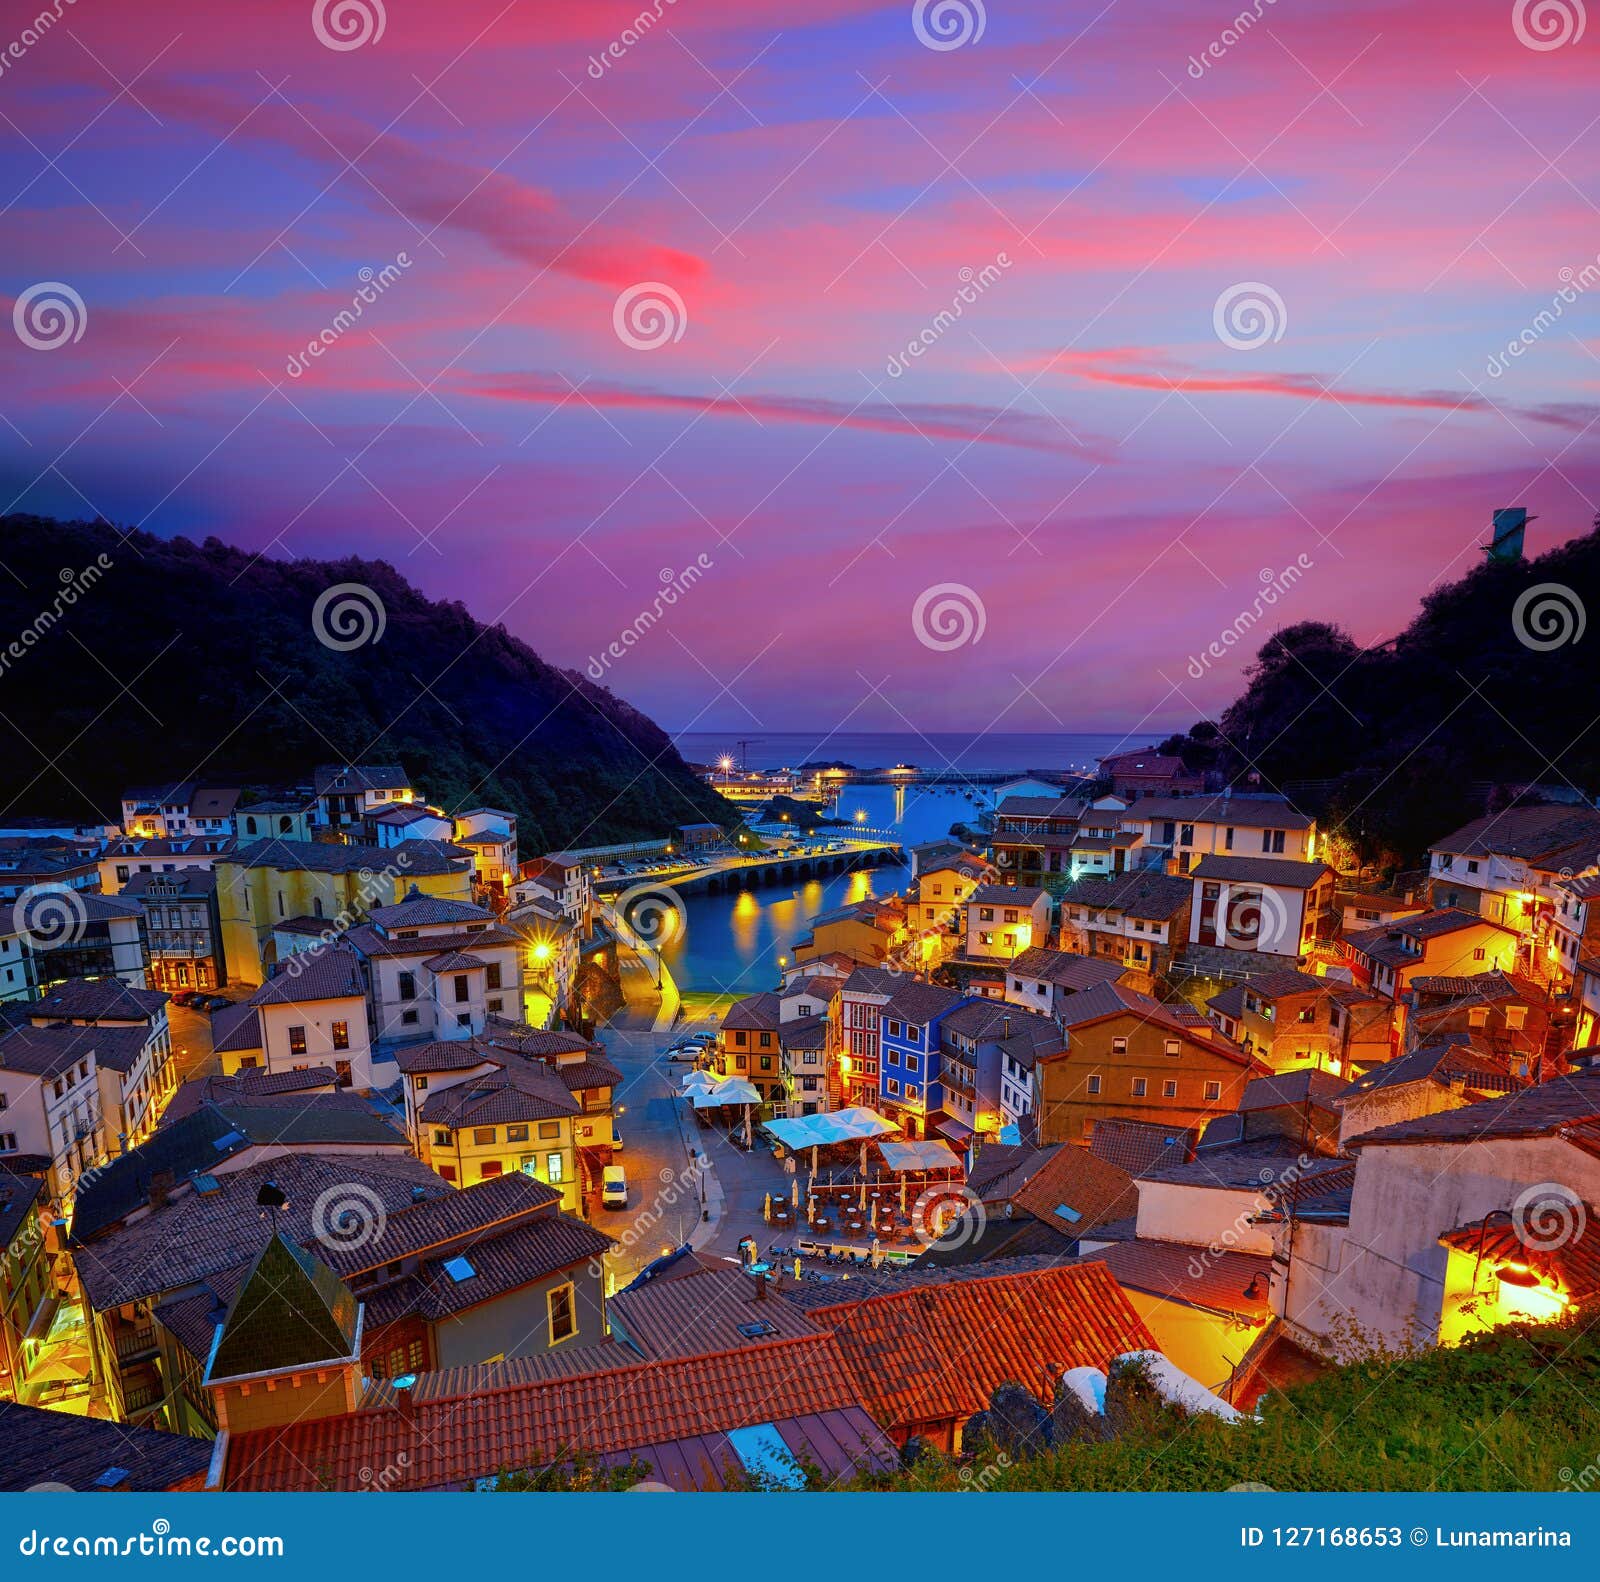 cudillero village in asturias spain